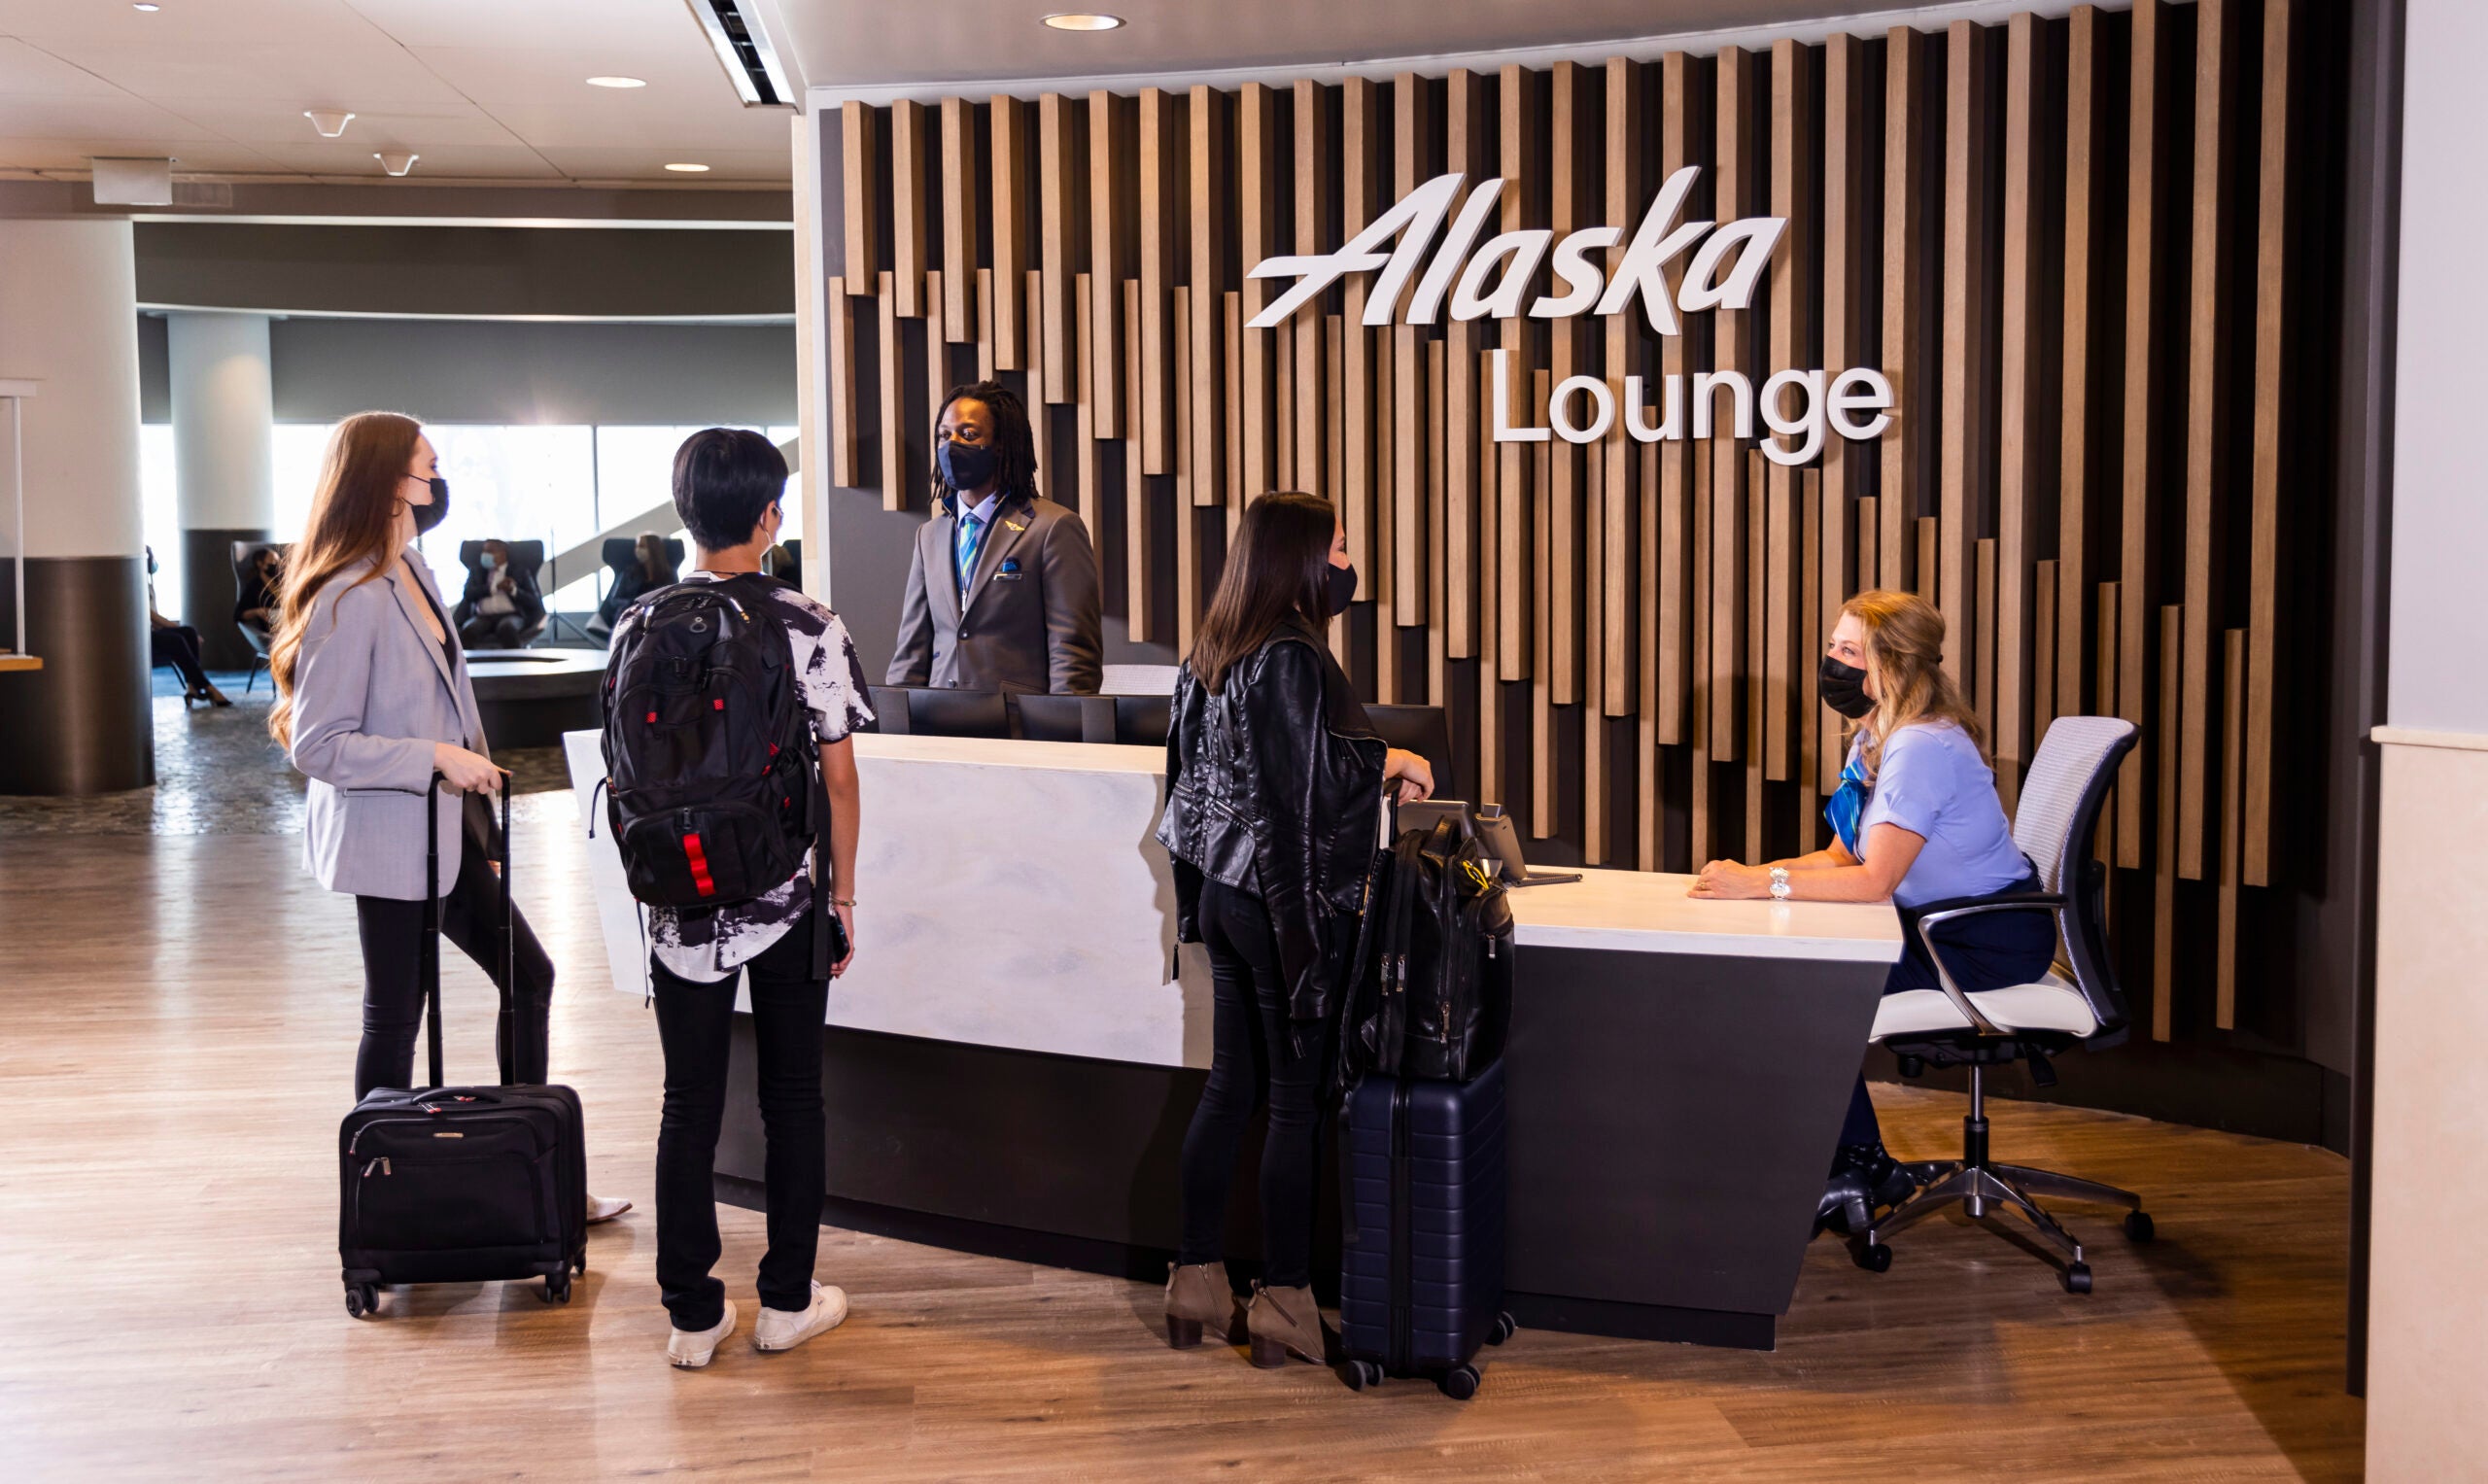 Alaska Airways tightens lounge entry, raises value